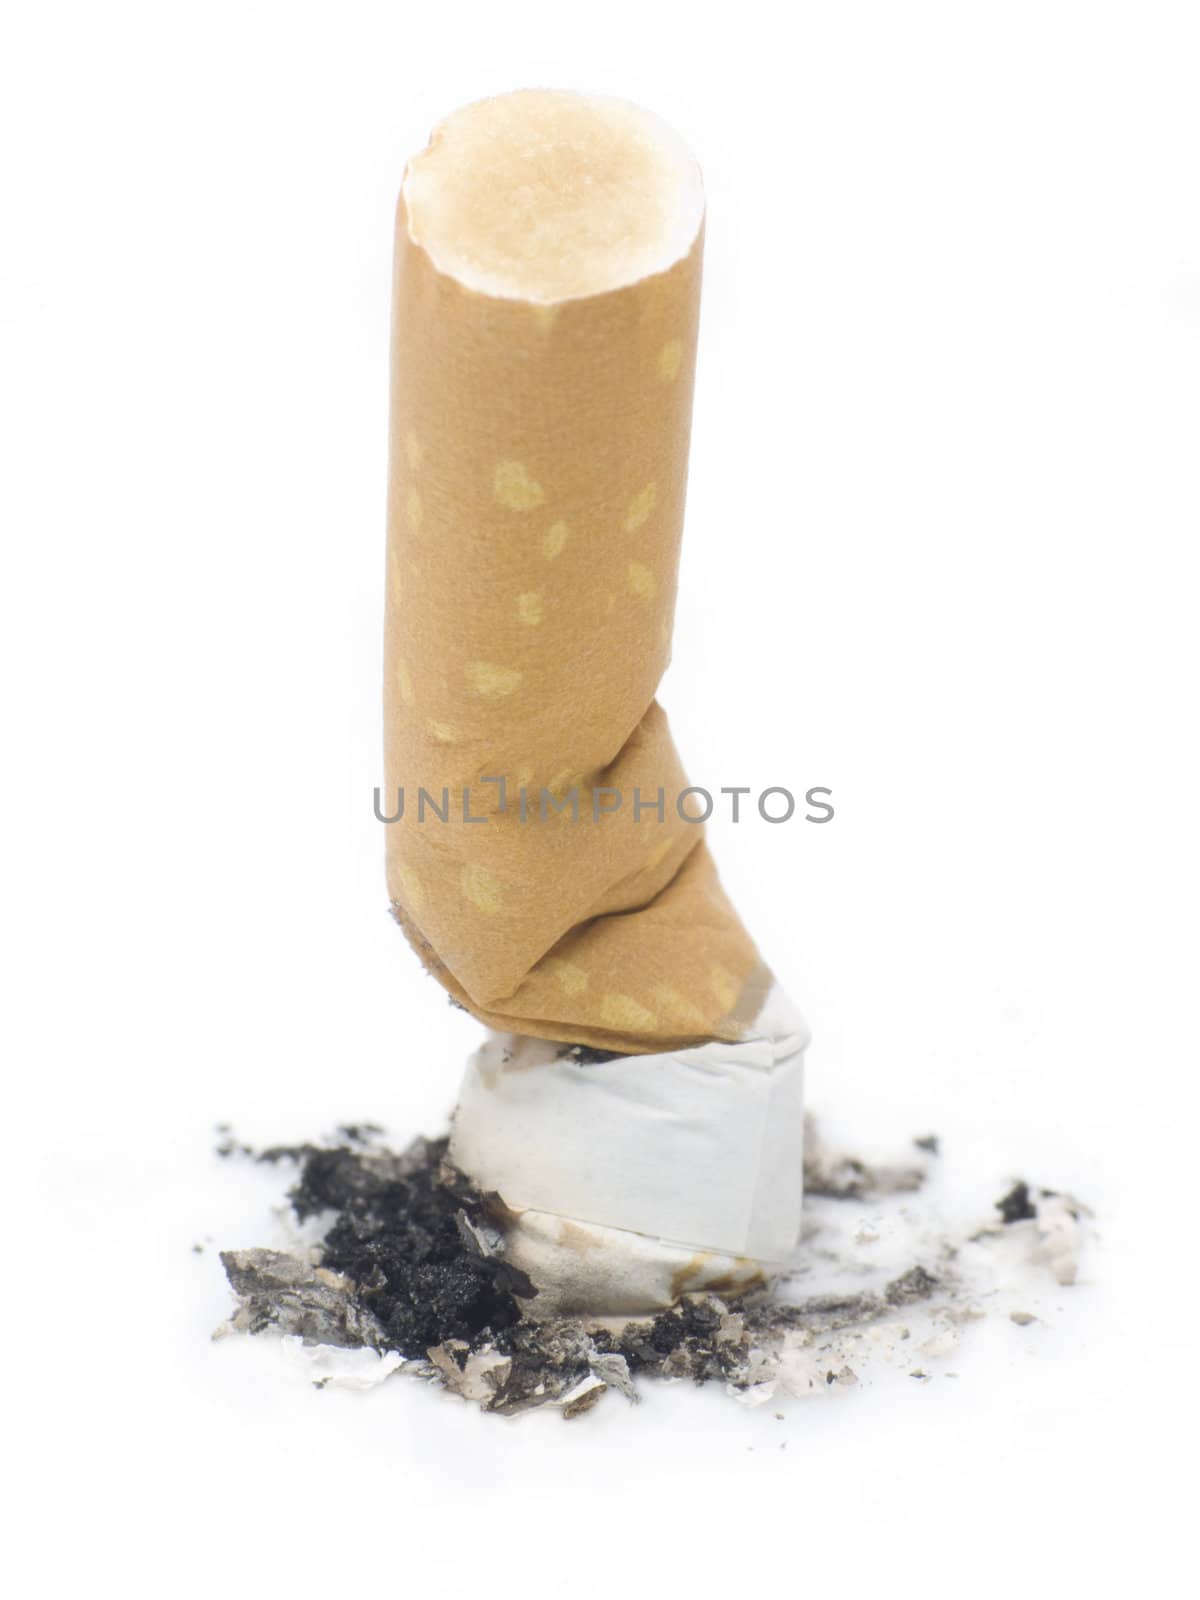 Cigarette But by devulderj